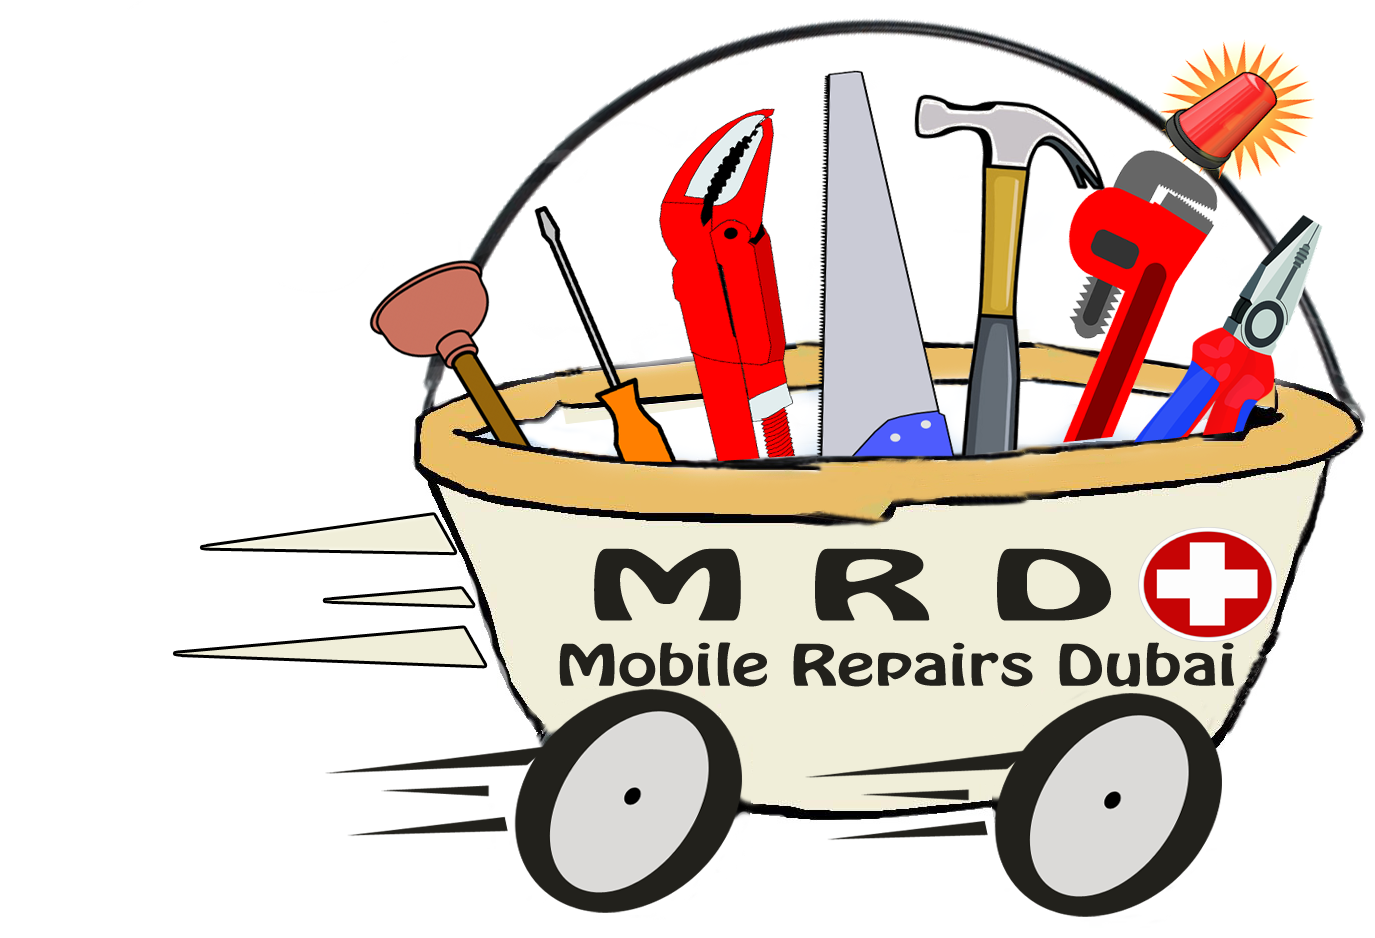 Mobile Repairs Dubai - Al Jadeed - Maintenance Company (1375x938)